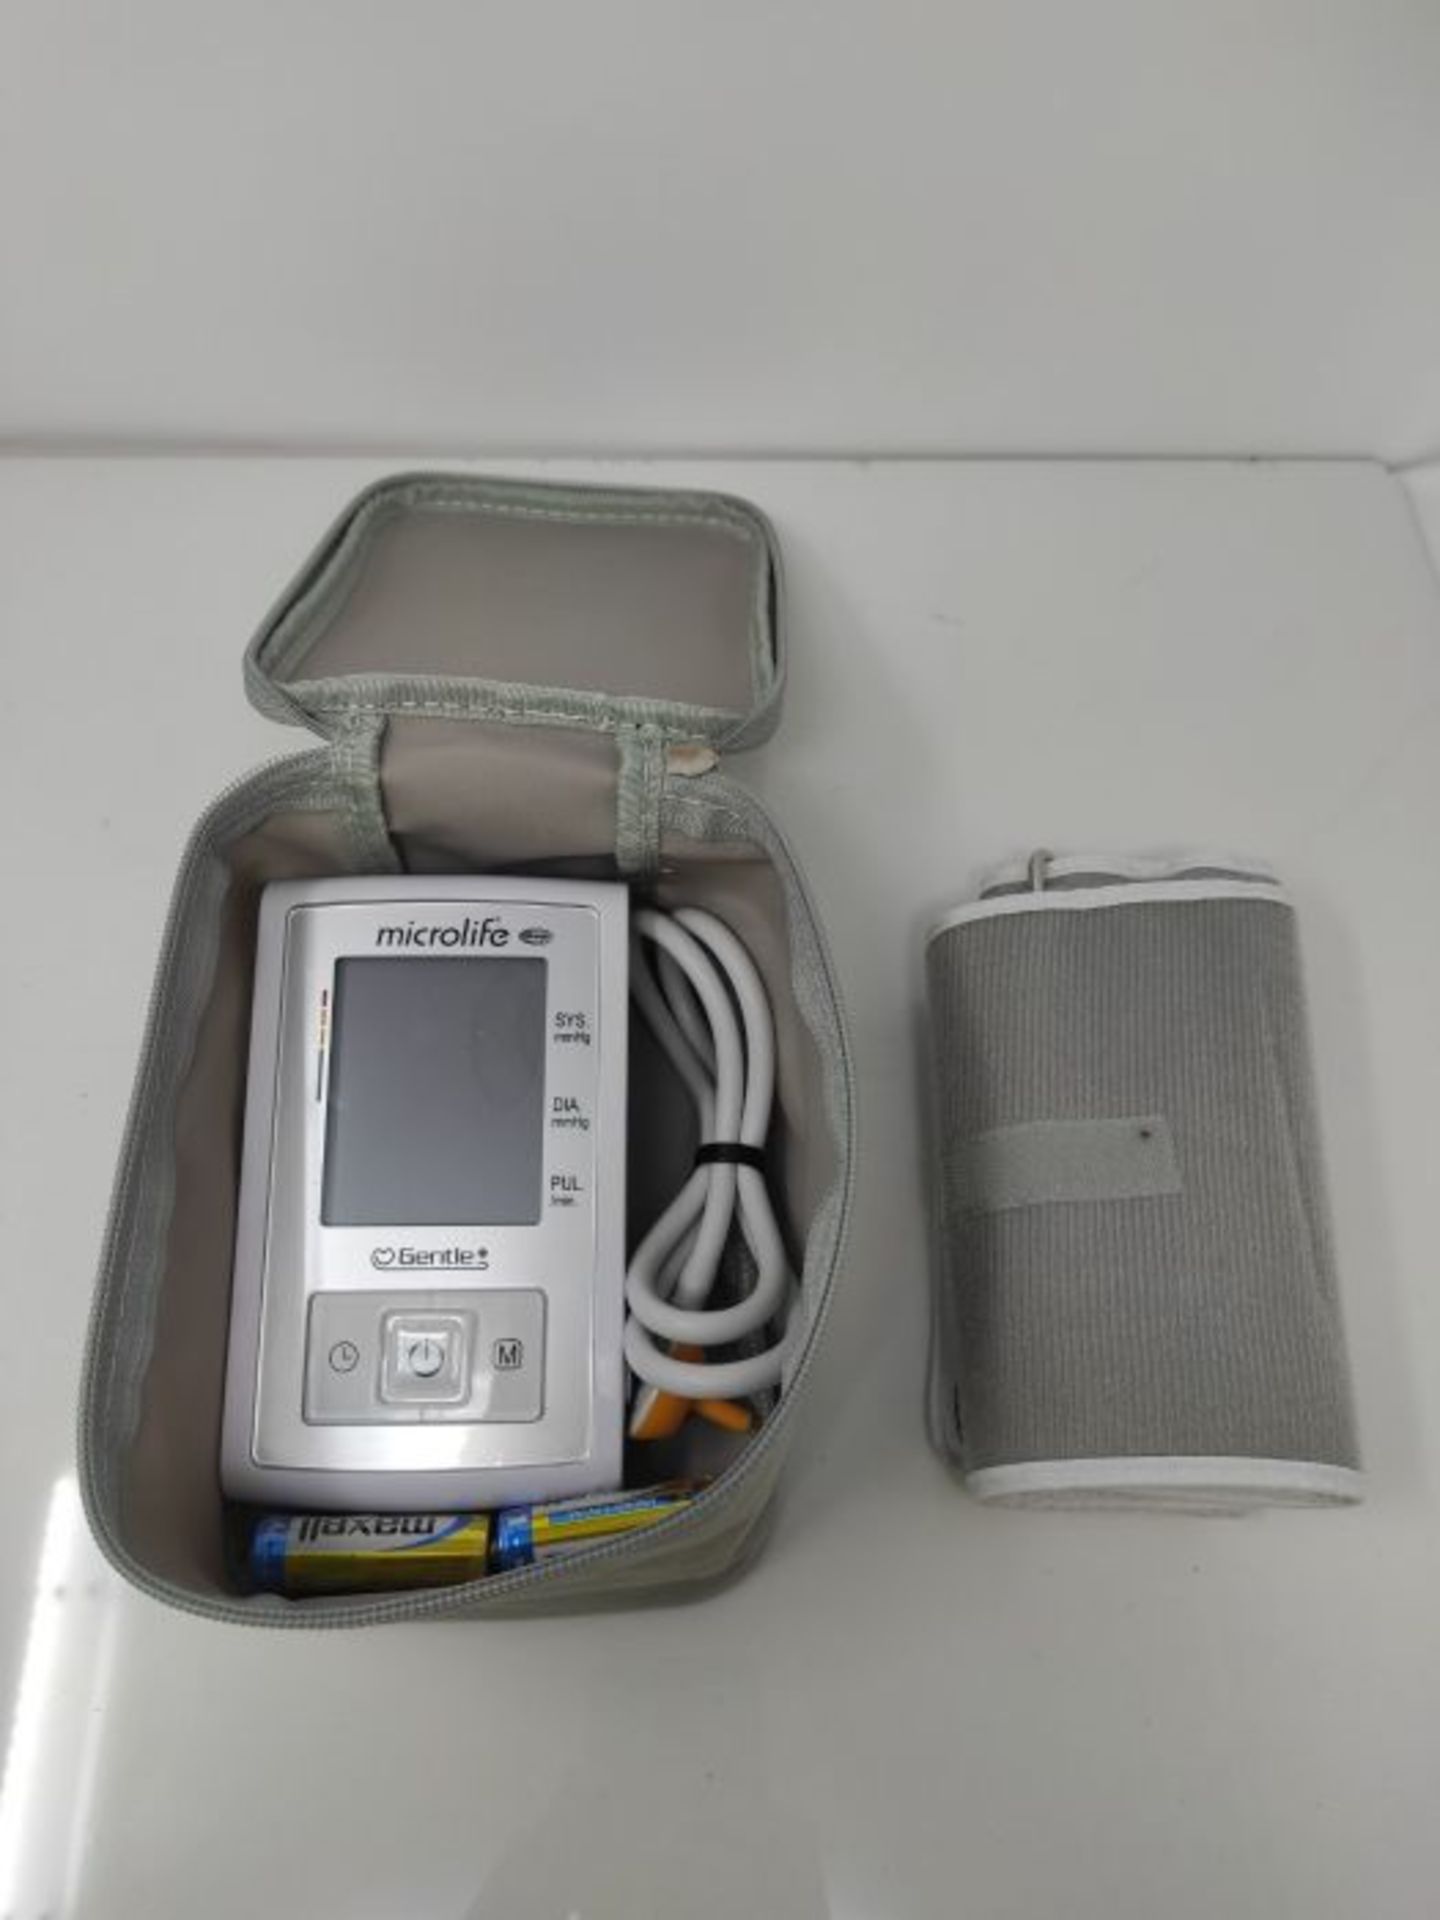 Microlife BPA3-P A3 Plus Digital Blood Pressure Monitor - Image 3 of 3